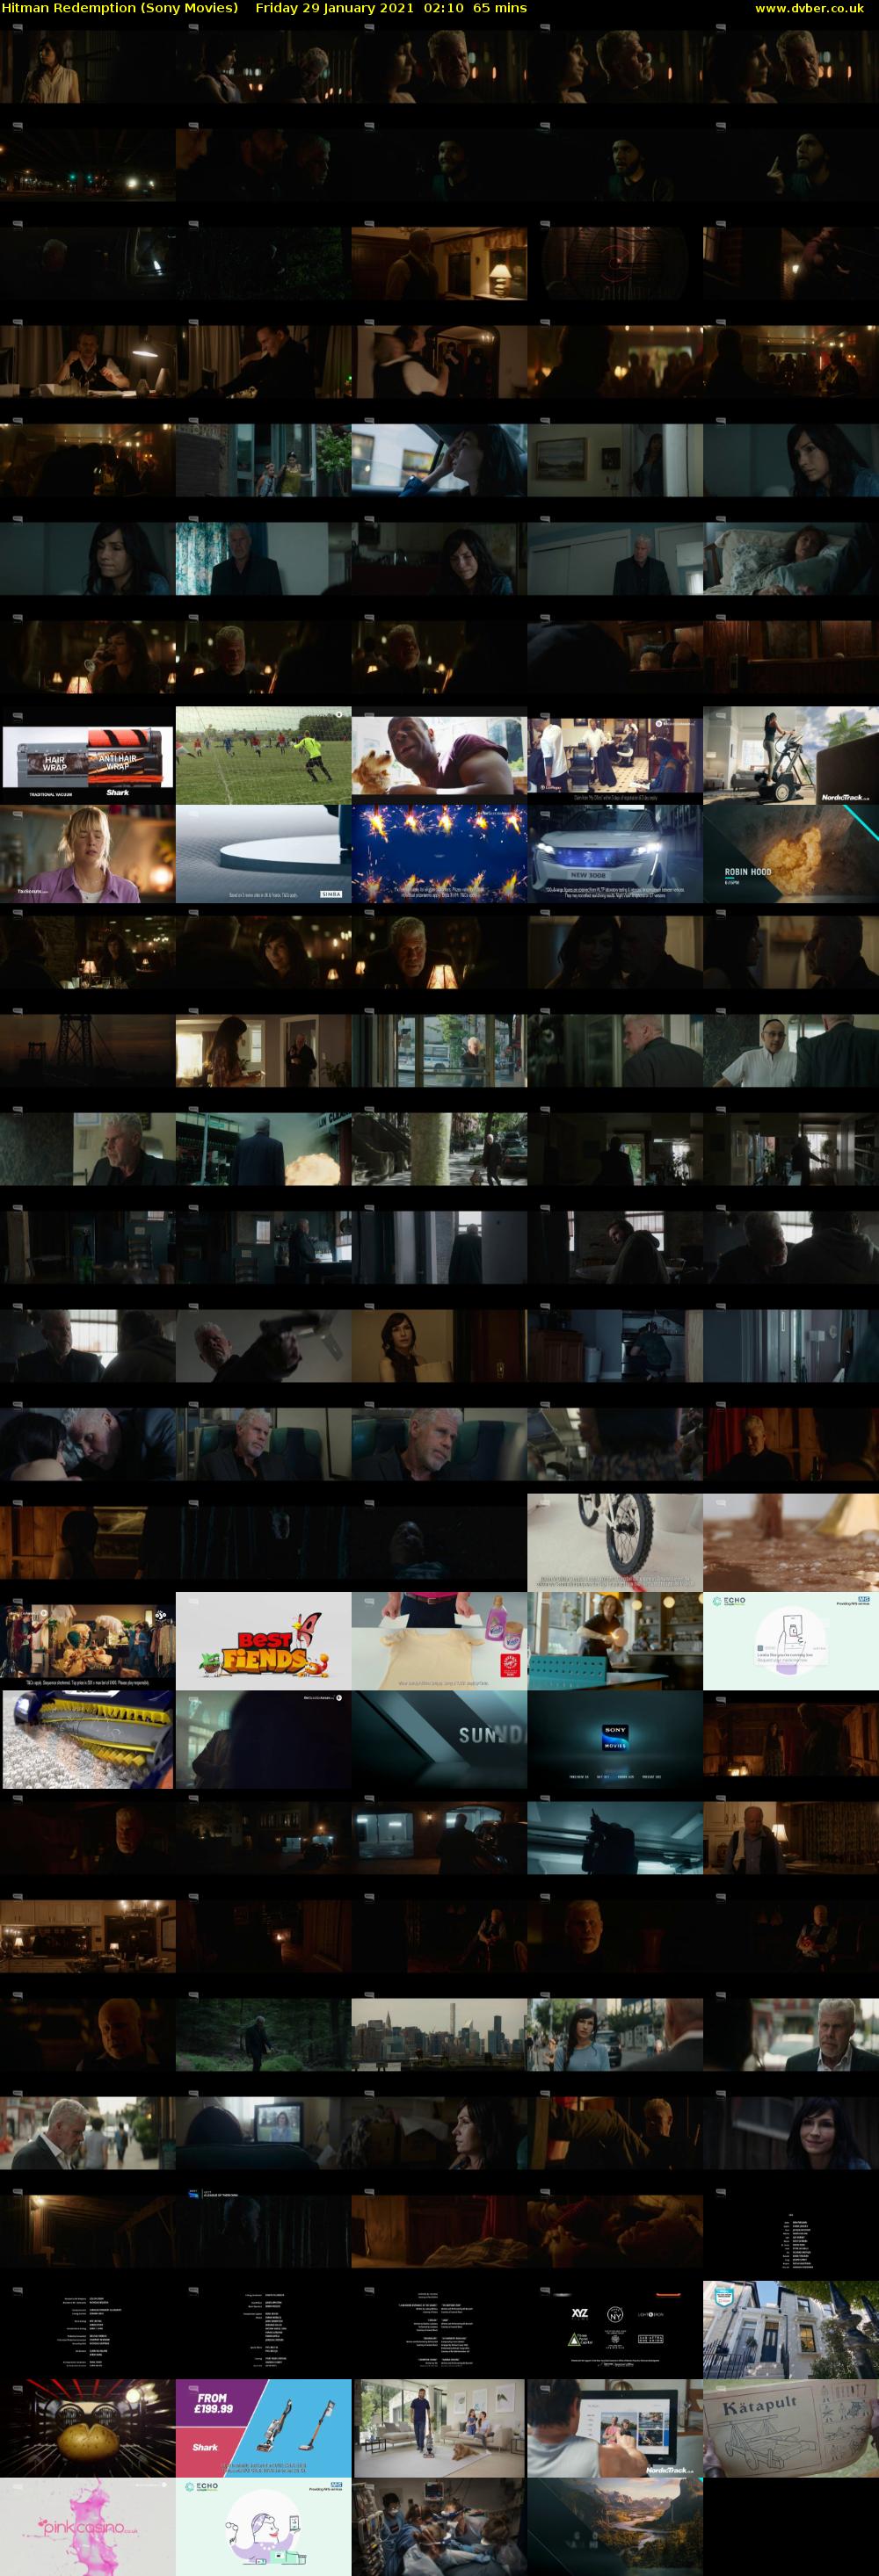 Hitman Redemption (Sony Movies) Friday 29 January 2021 02:10 - 03:15